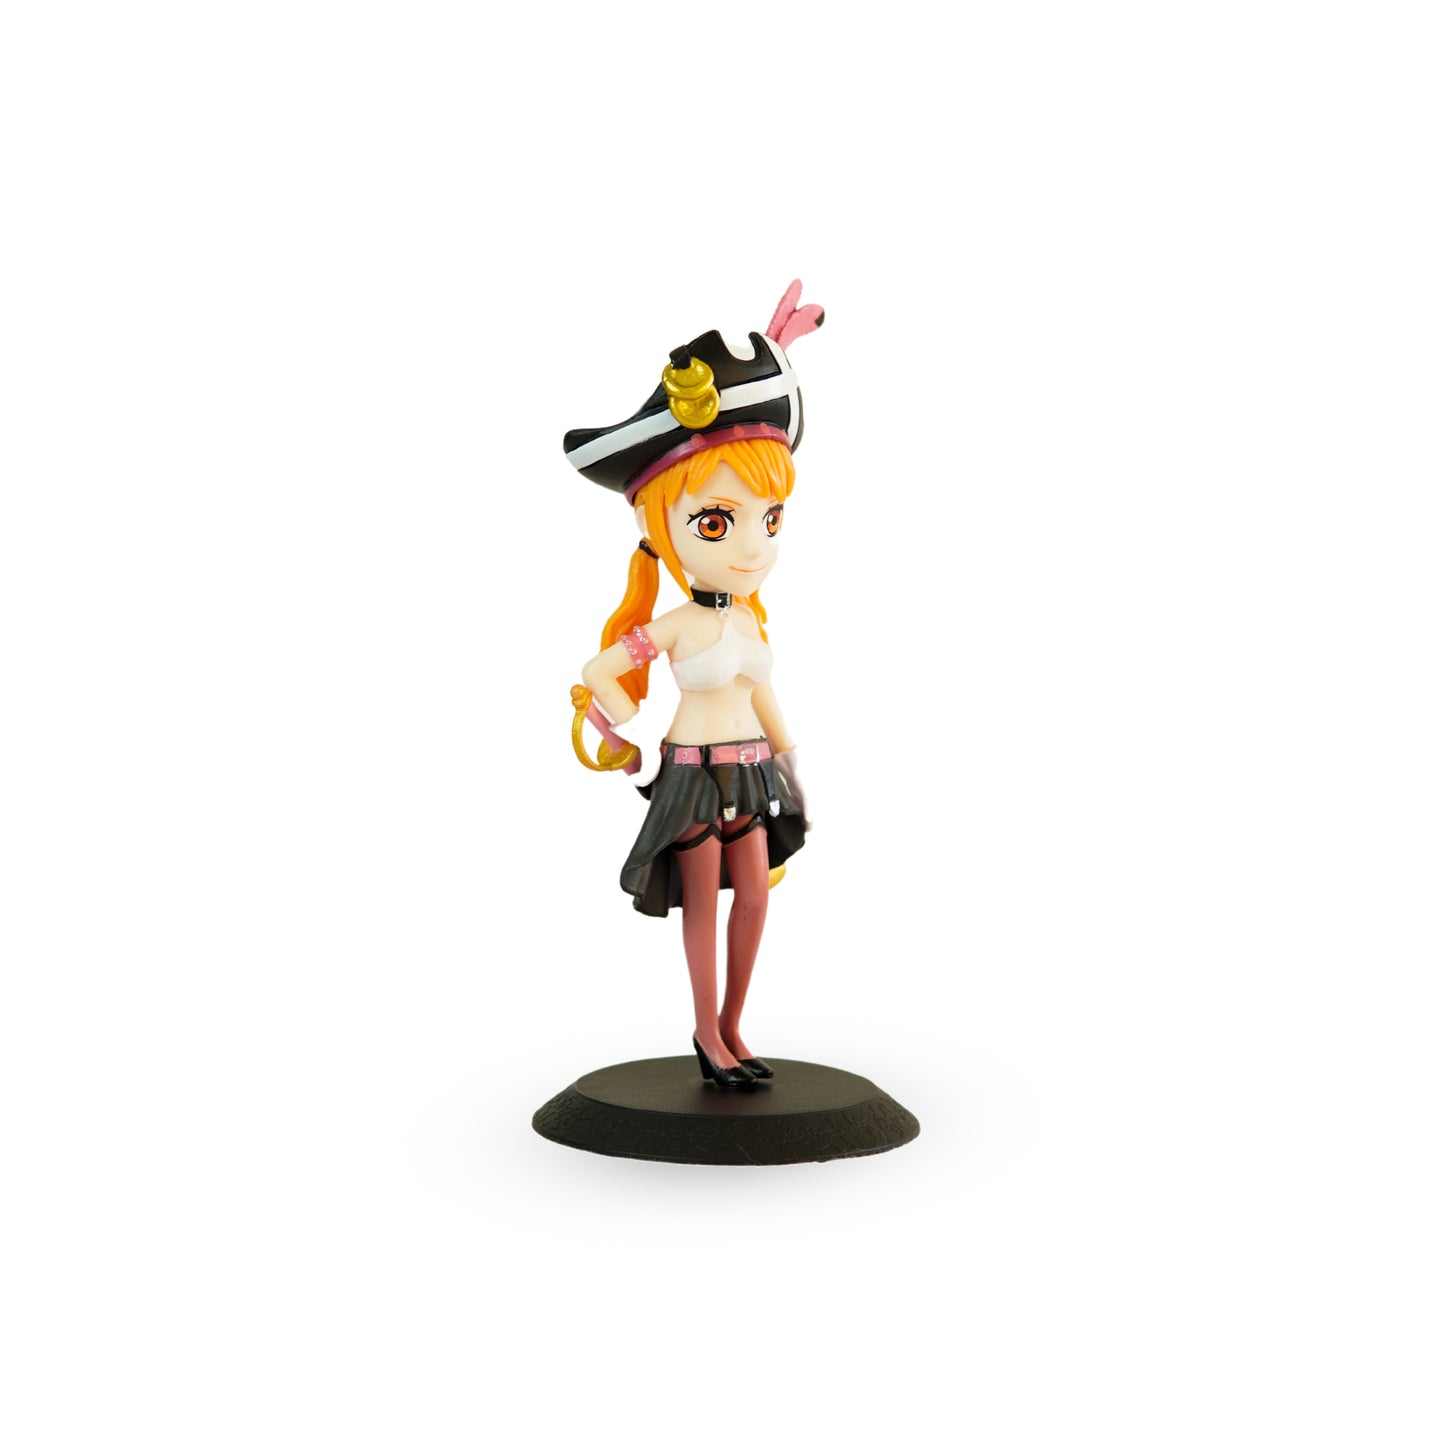 Nami (Red Movie) Figurine - One Piece